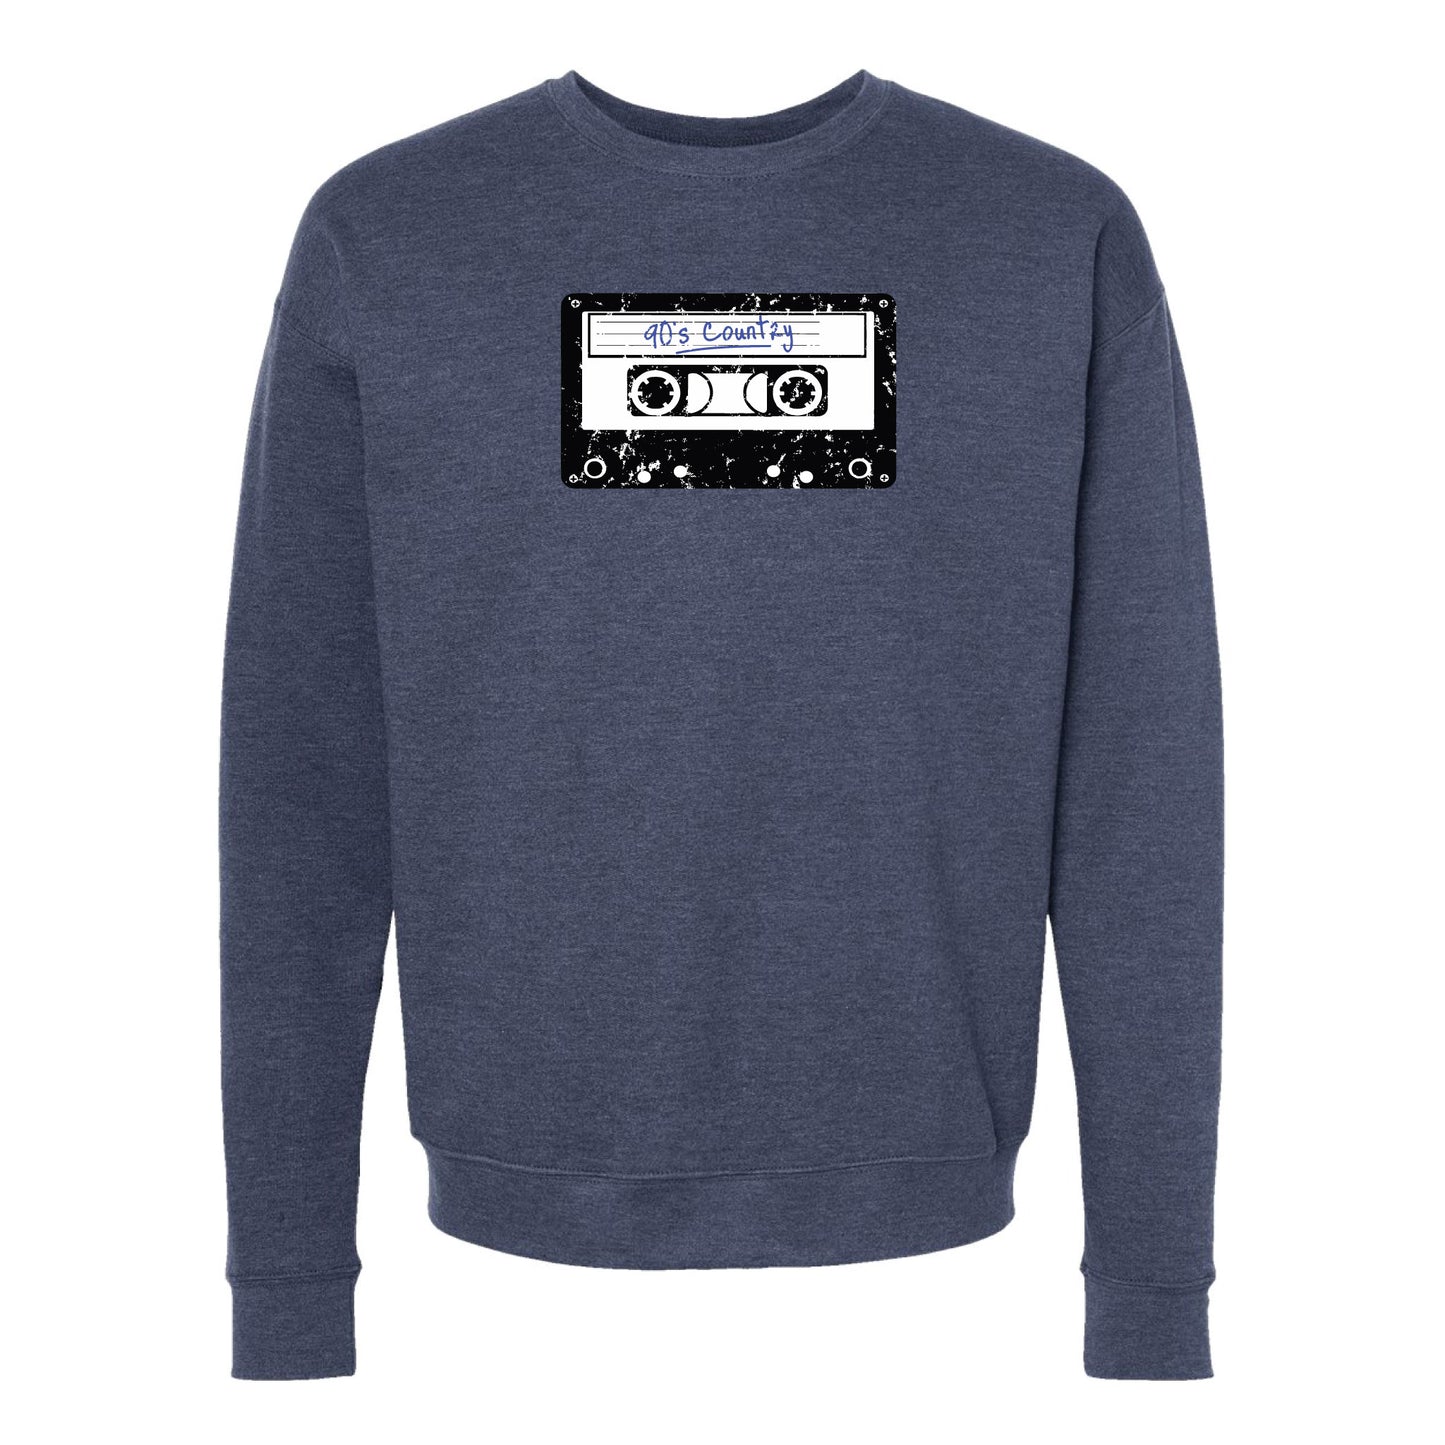 90s Country Cassette Crewneck Sweatshirt